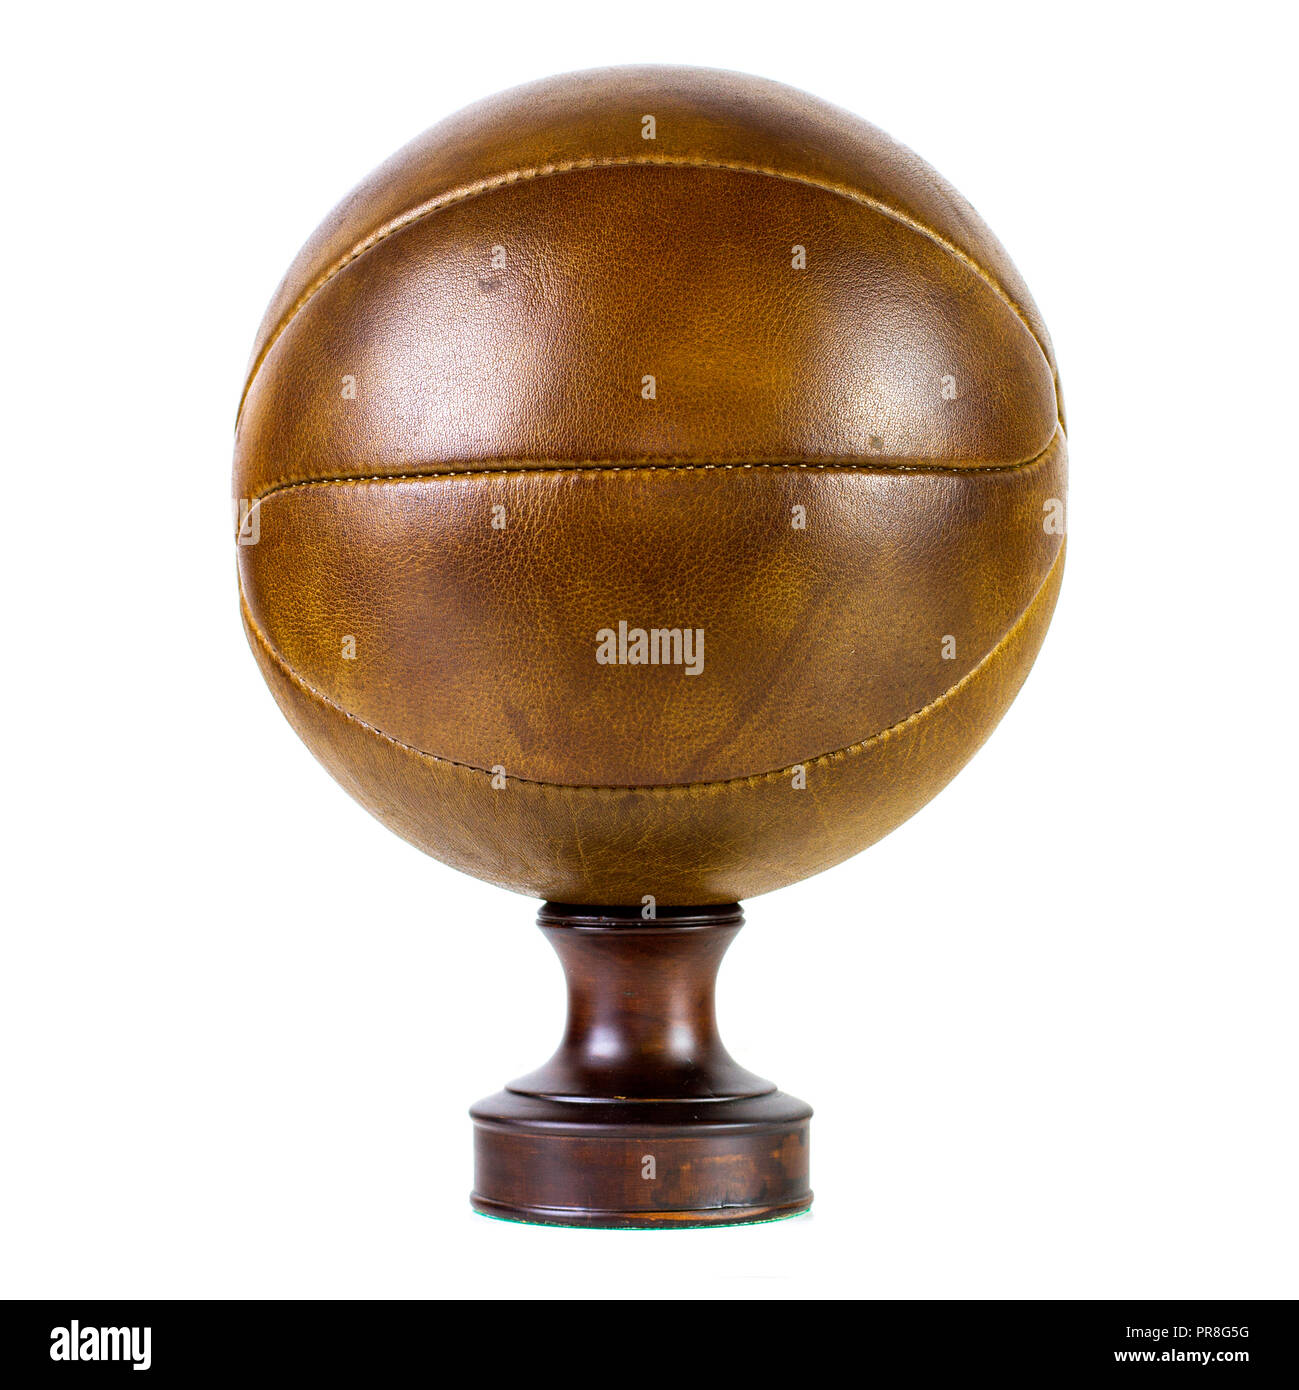 Pelle vintage basket ball retrò Foto Stock